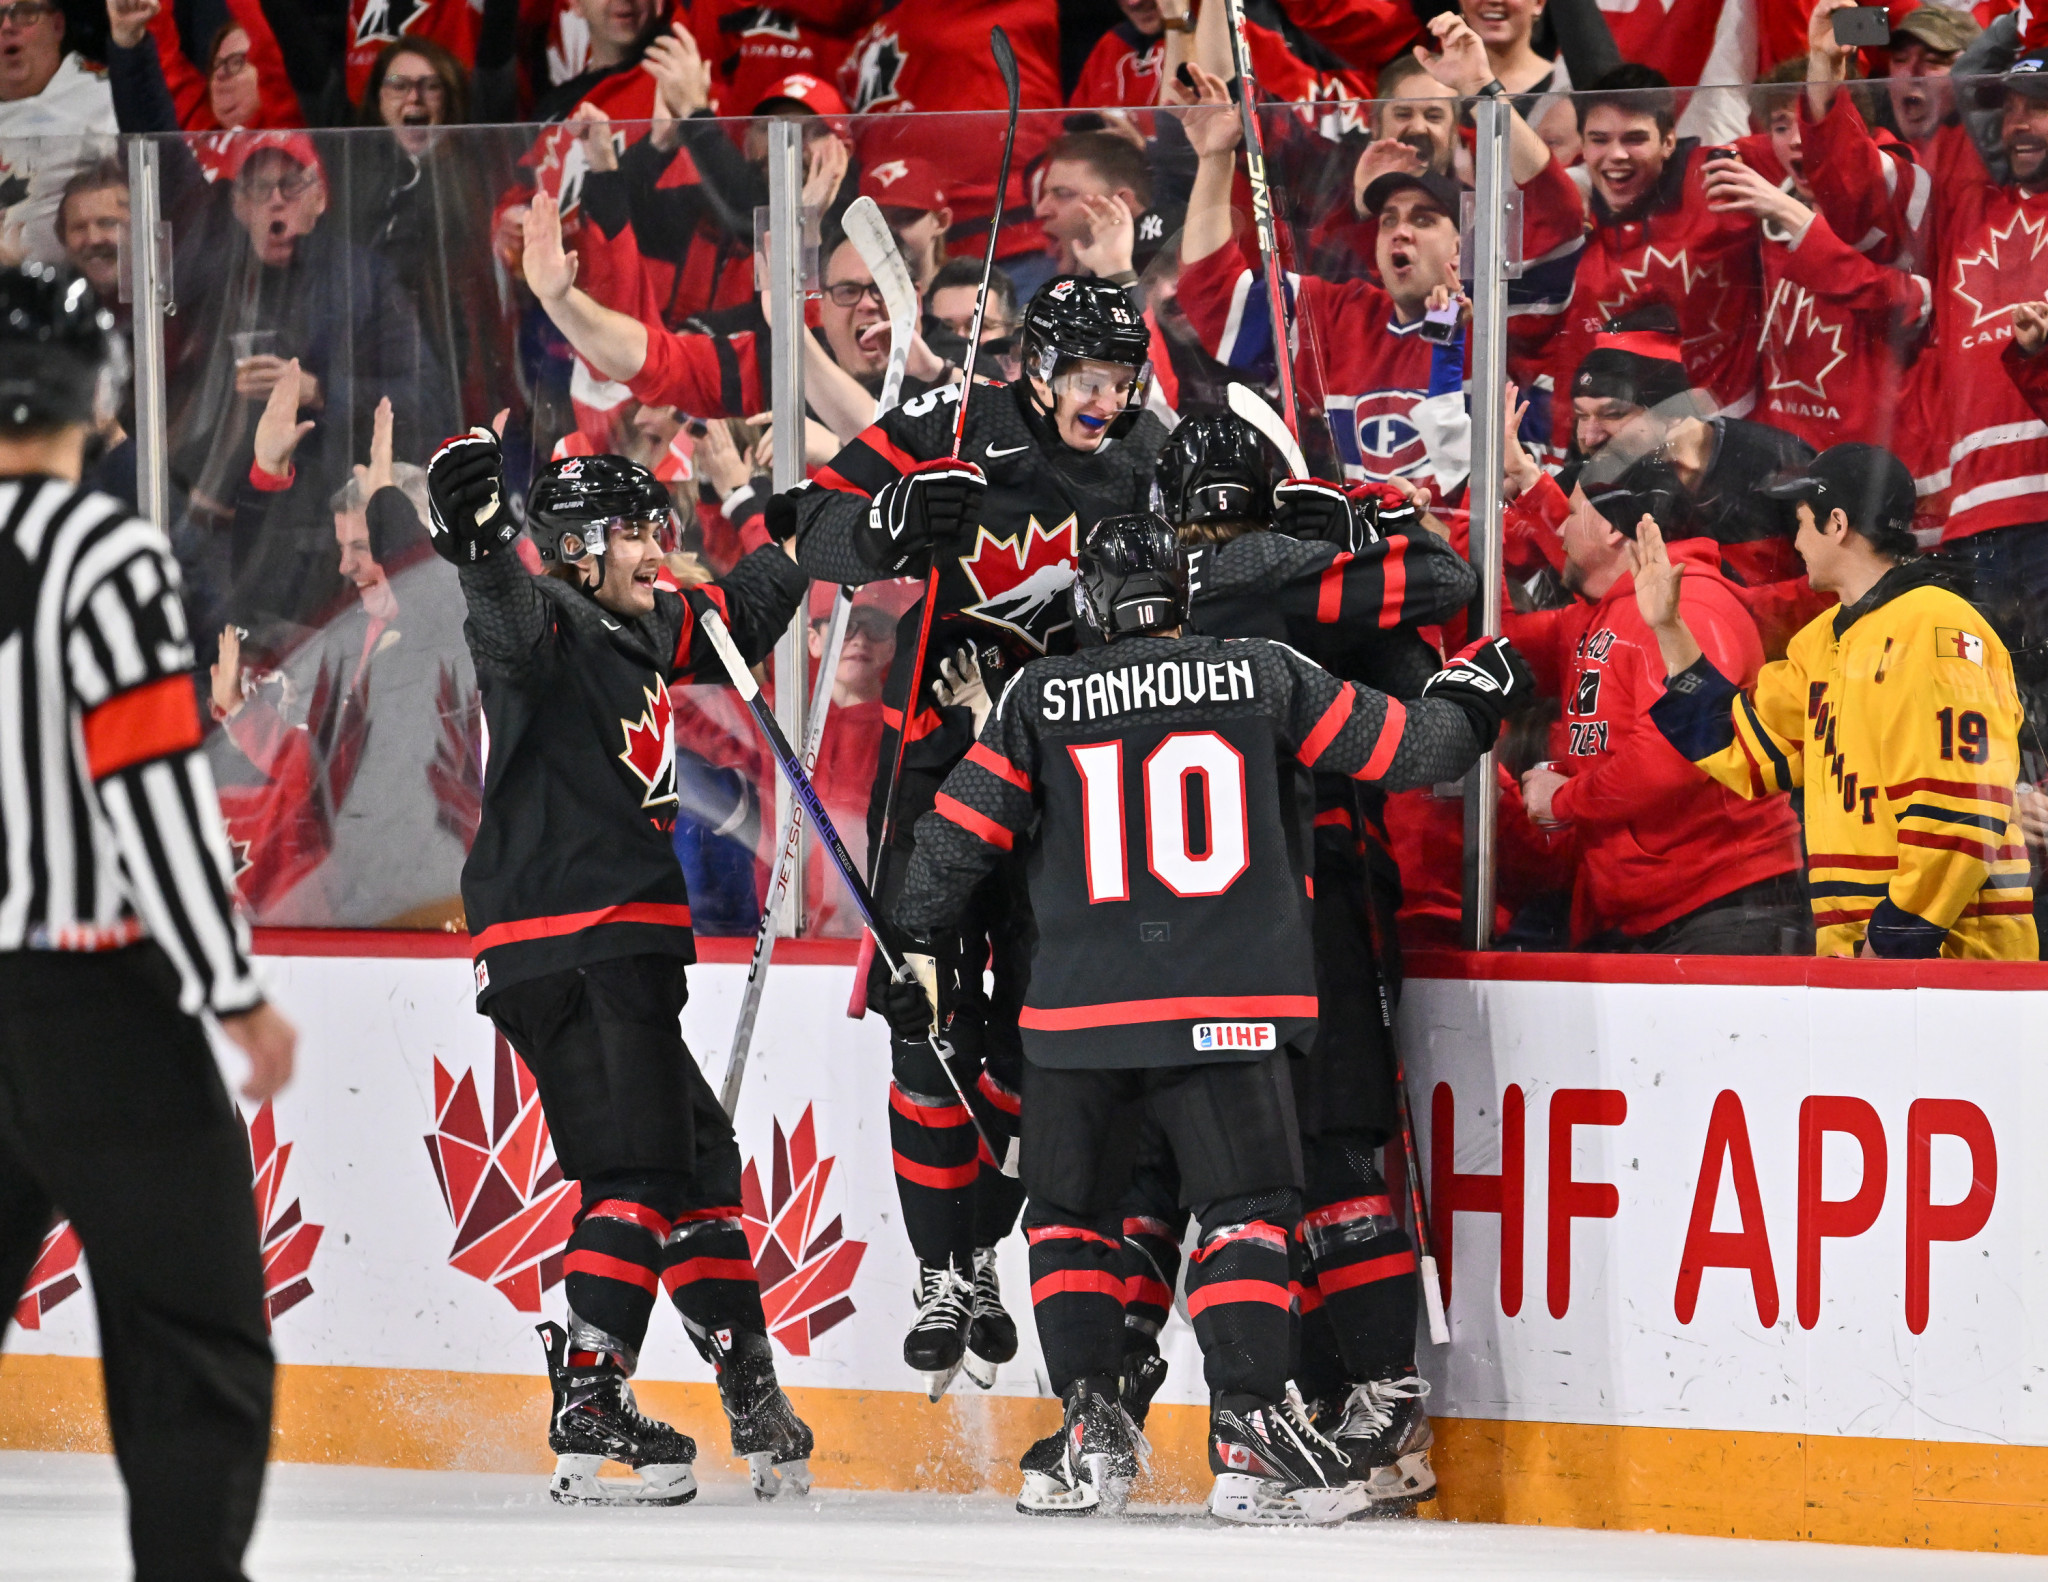 Canada narrowly keep title chances alive at IIHF World Junior Championship